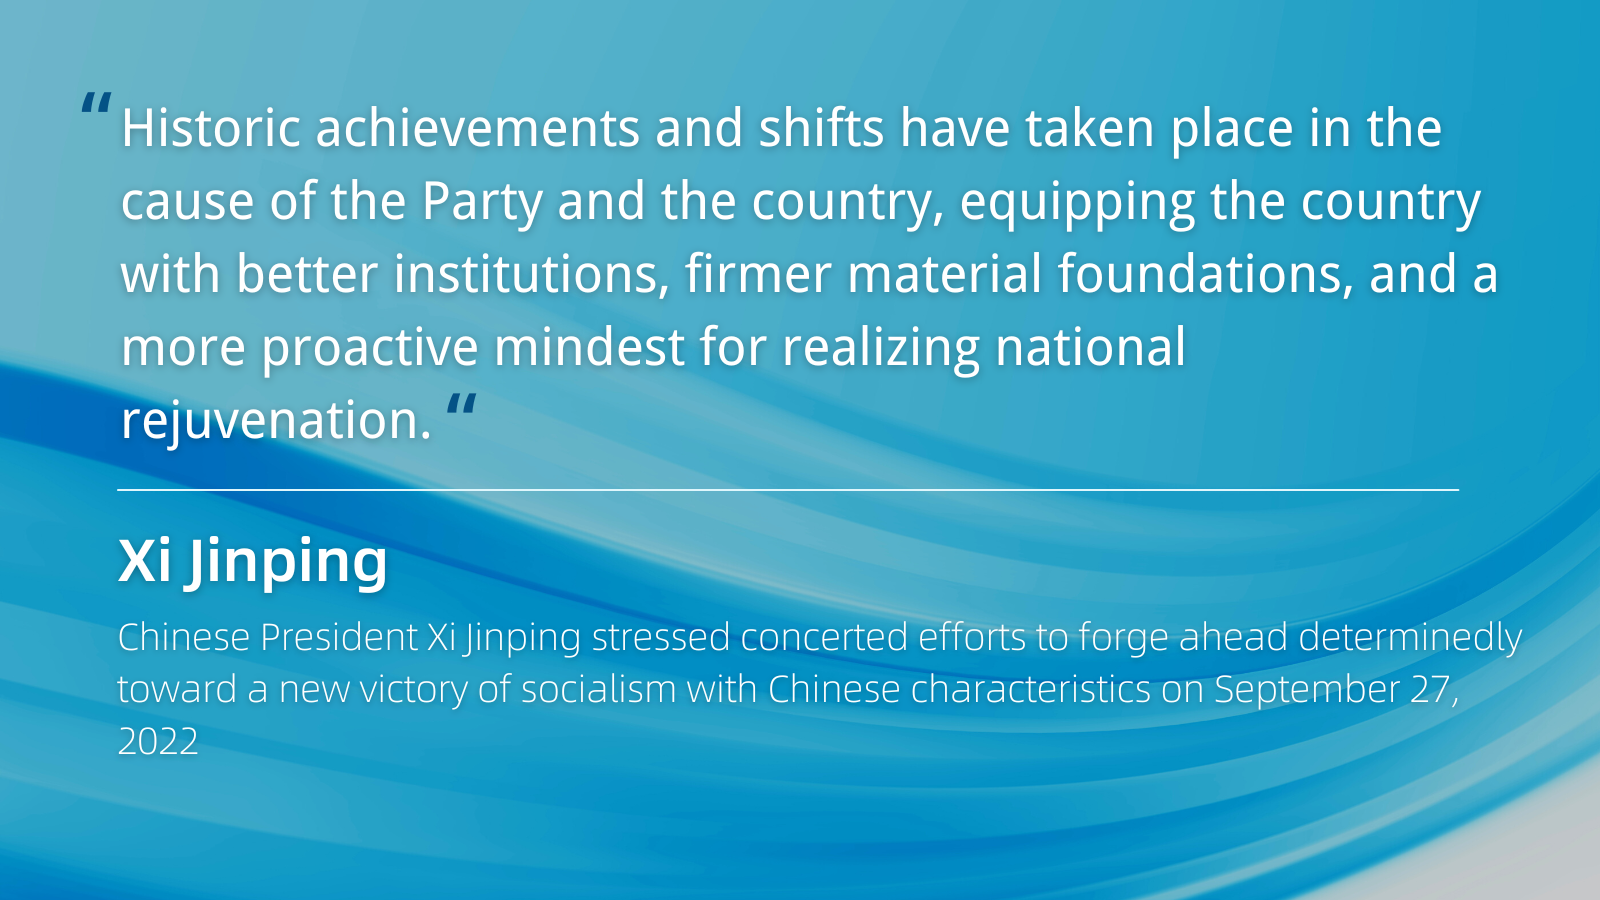 5 characteristics of socialism